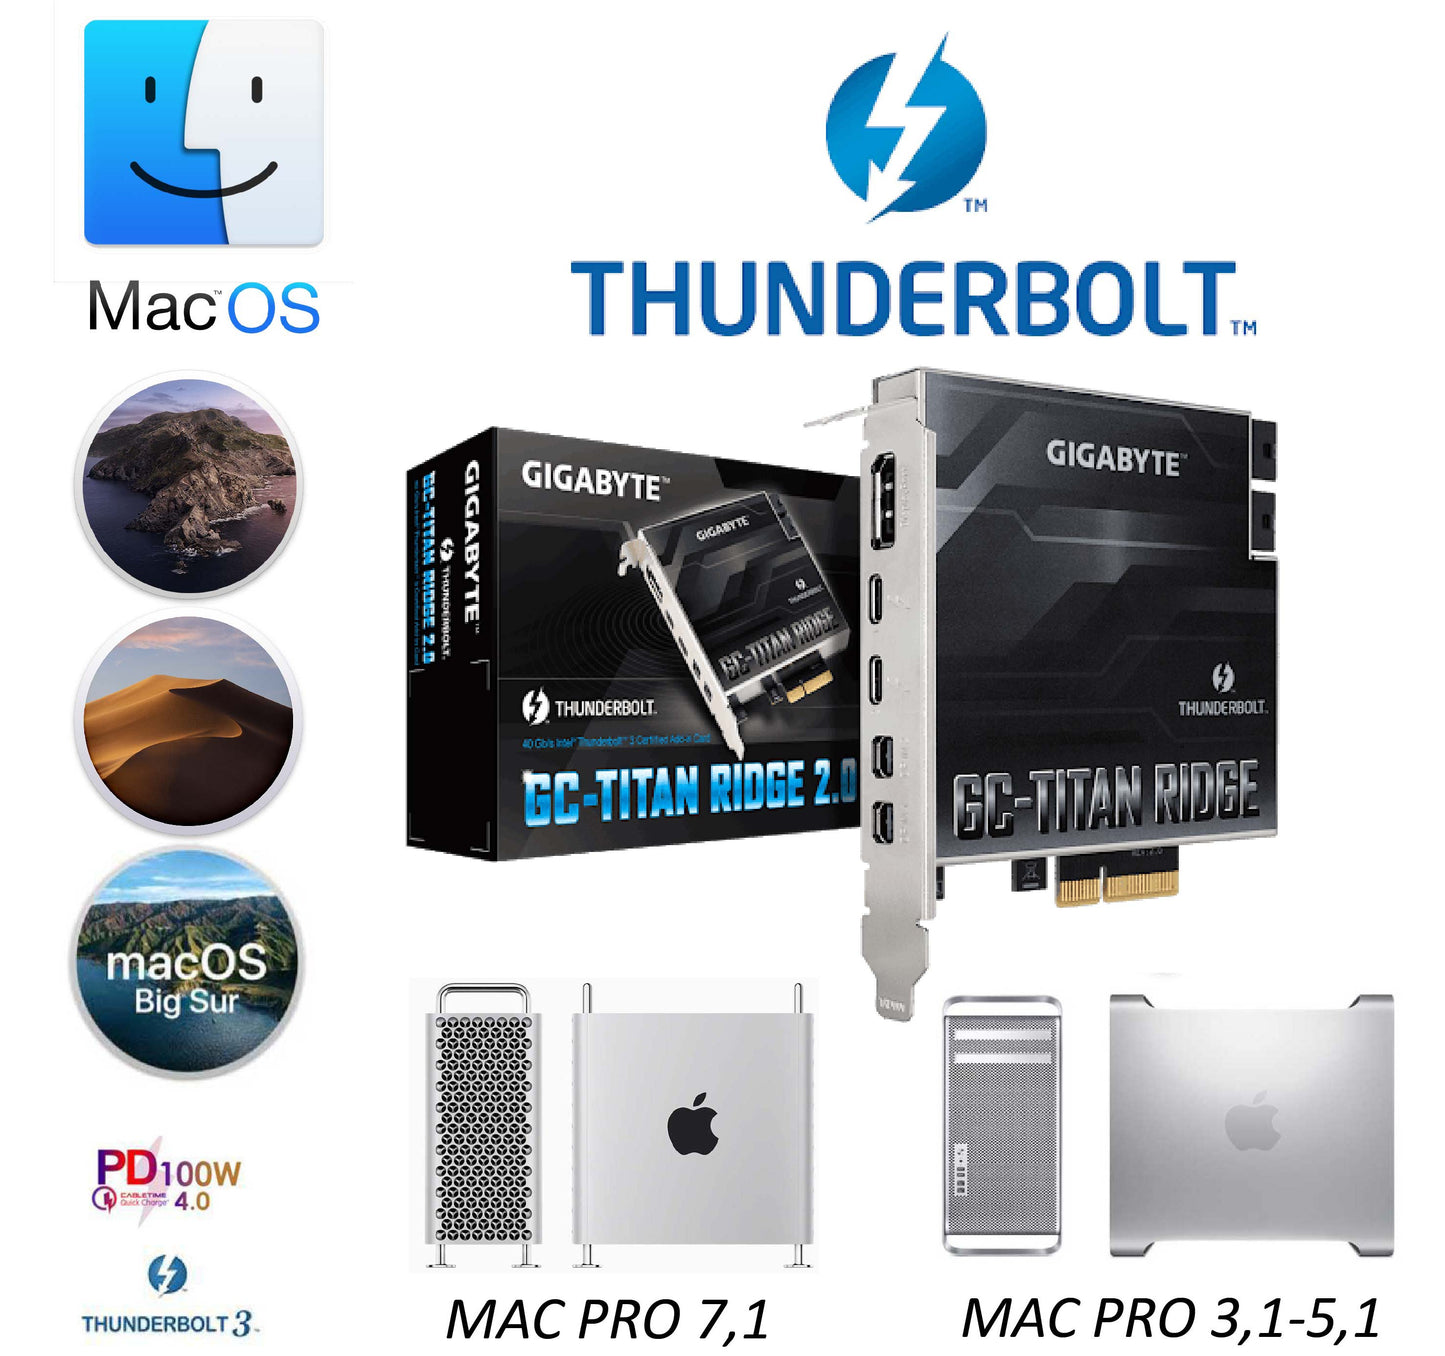 Gigabyte Titan Ridge 2.0 Thunderbolt 3 Flashed For Mac Pro